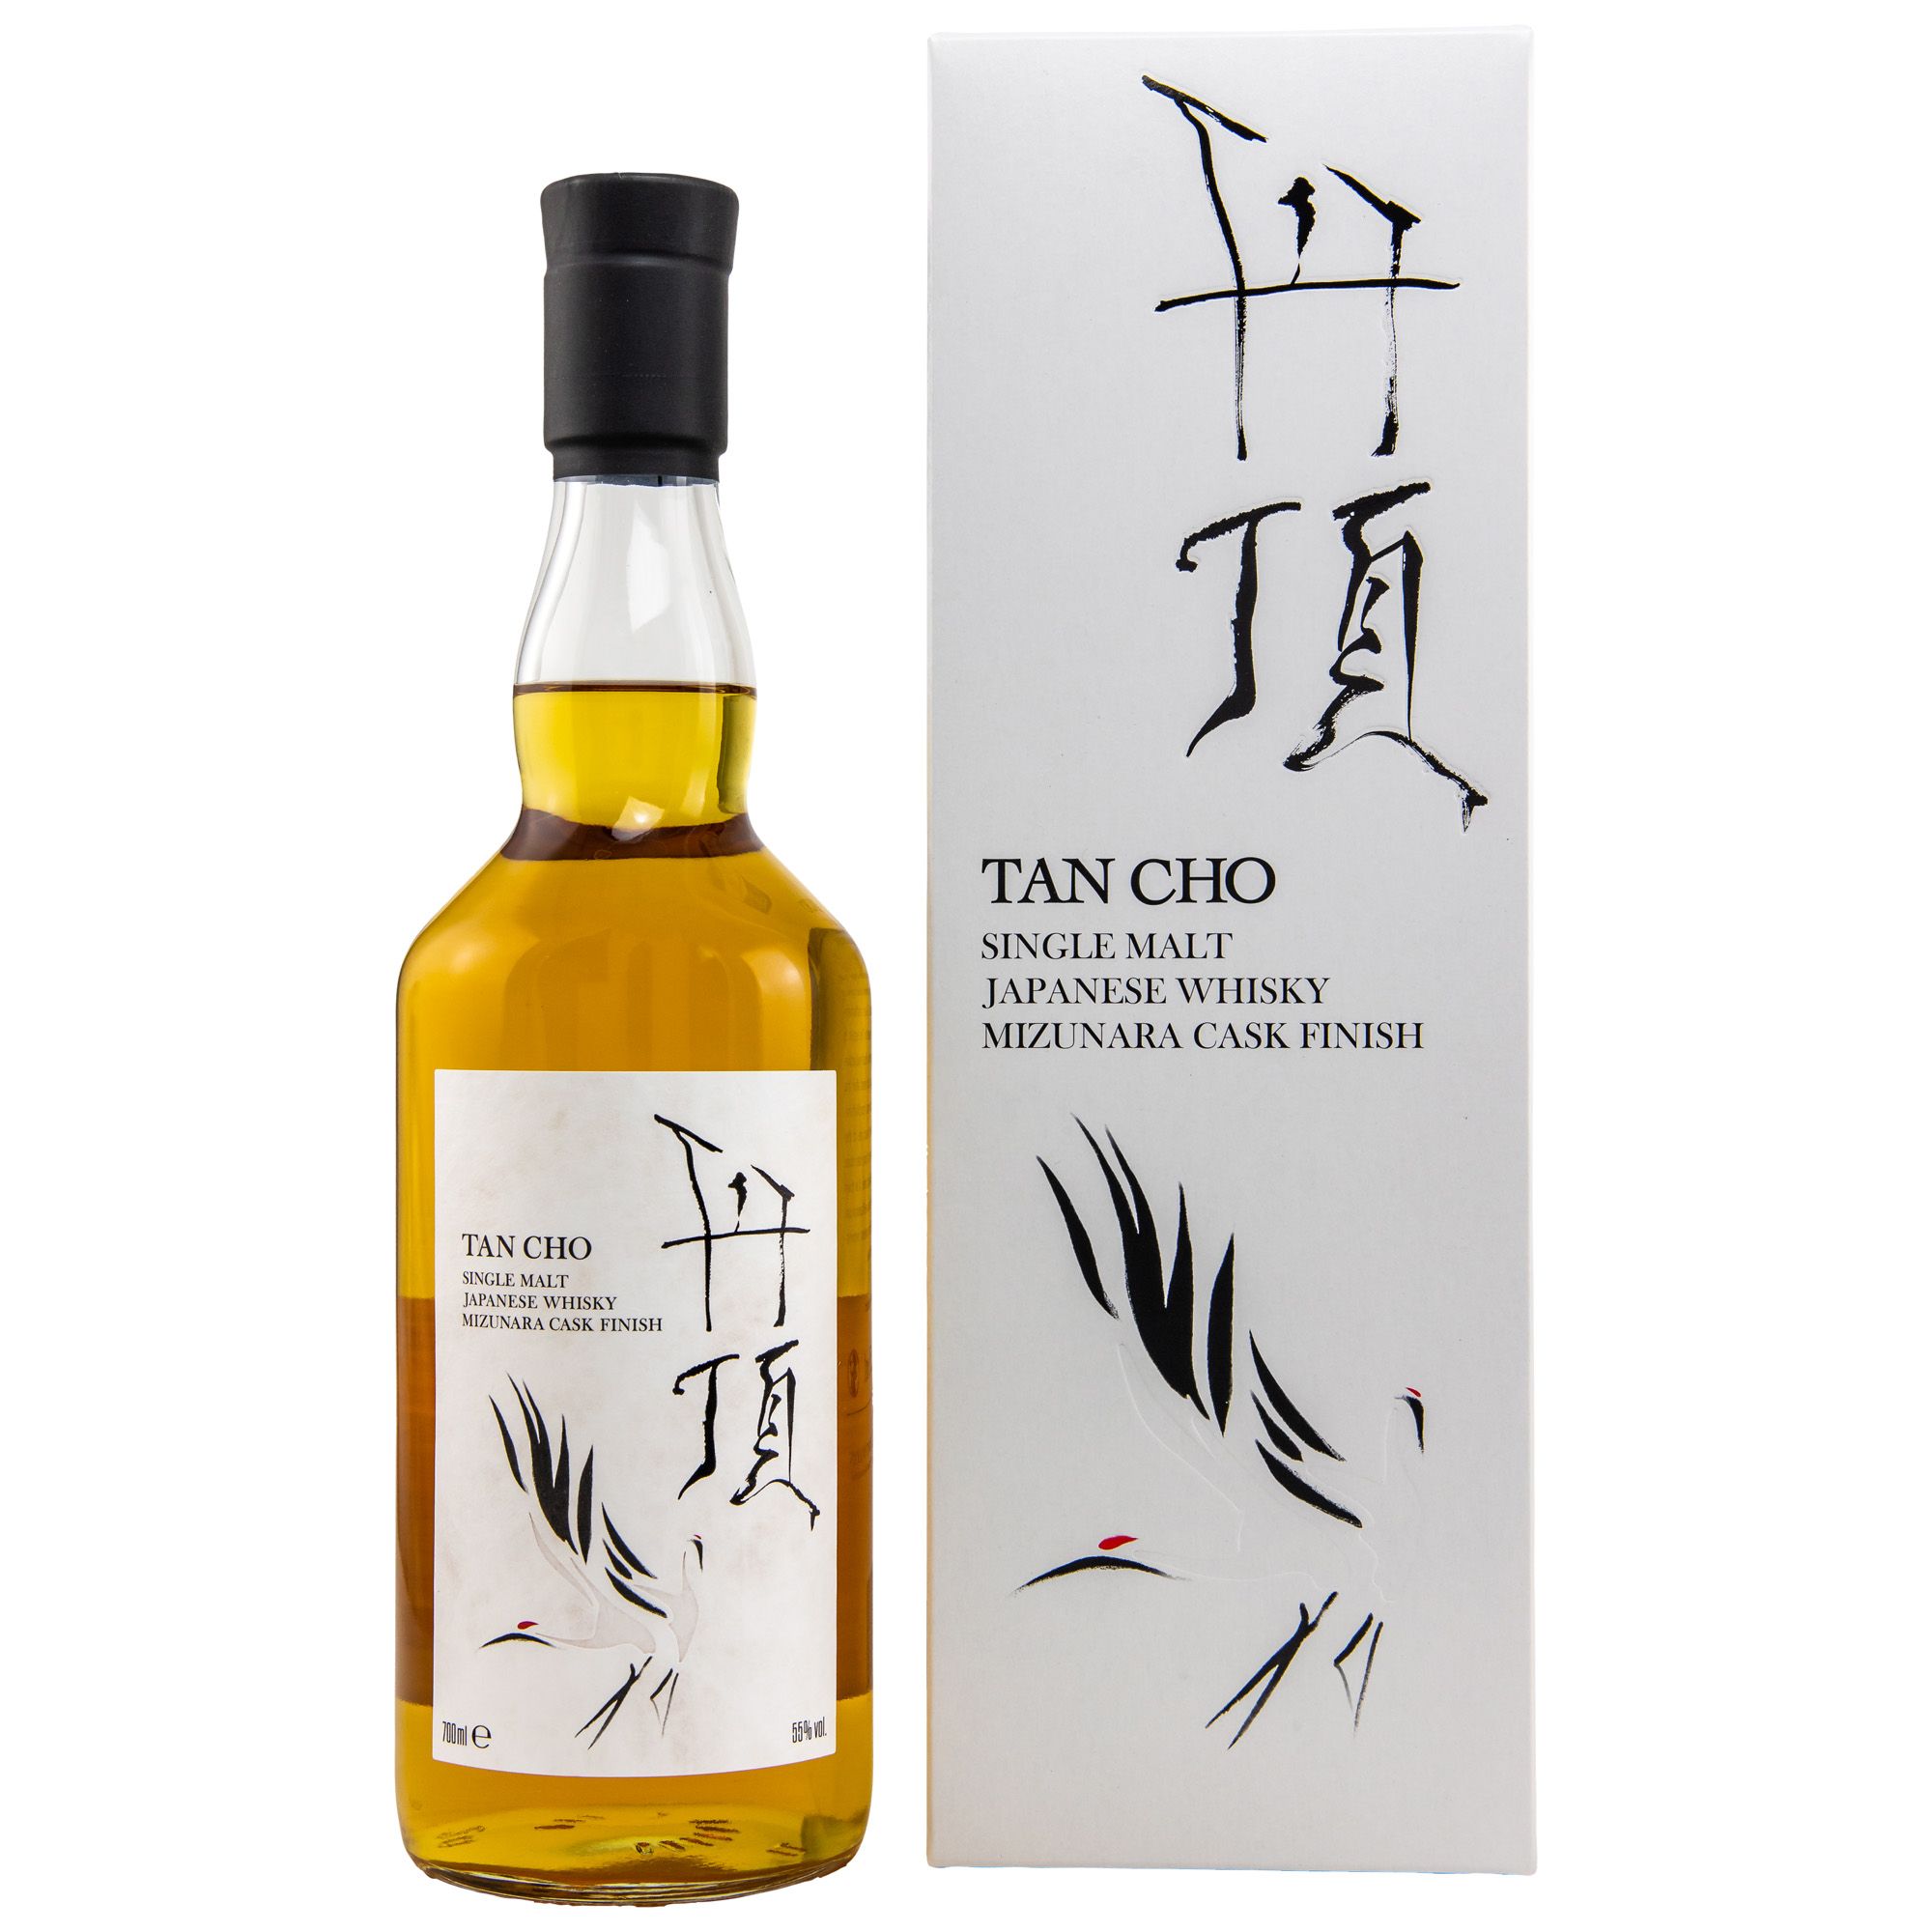 Tan Cho Japanese Single Malt Whisky - Mizunara Cask Finish 55% 0,7l